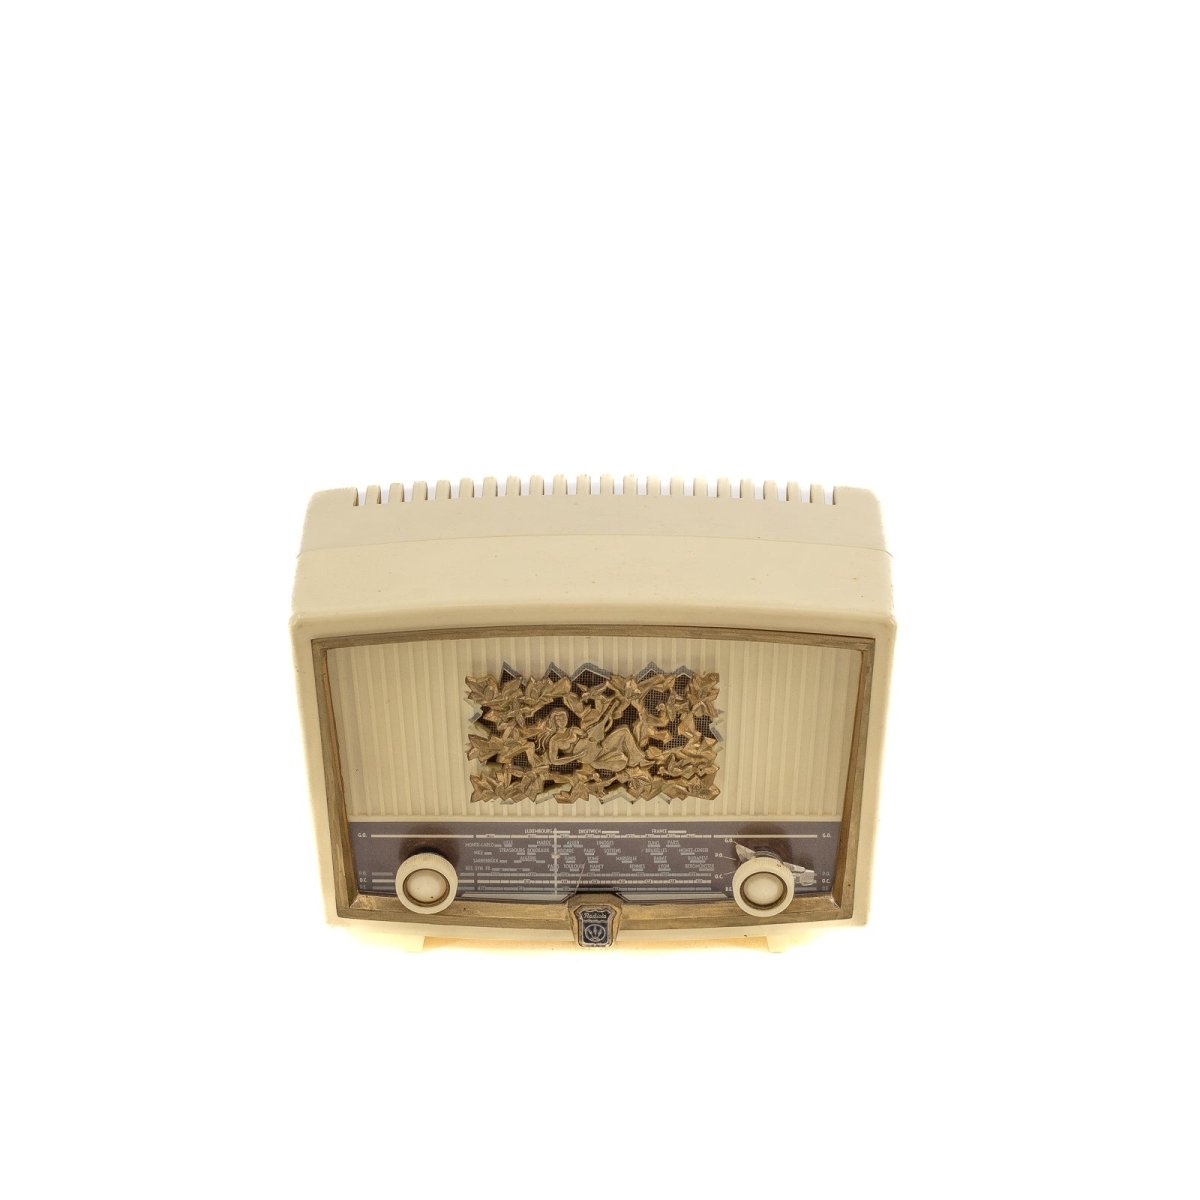 Transistor Bluetooth Radiola Vintage 50’S enceinte connectée française haut de gamme absolument prodige radio vintage